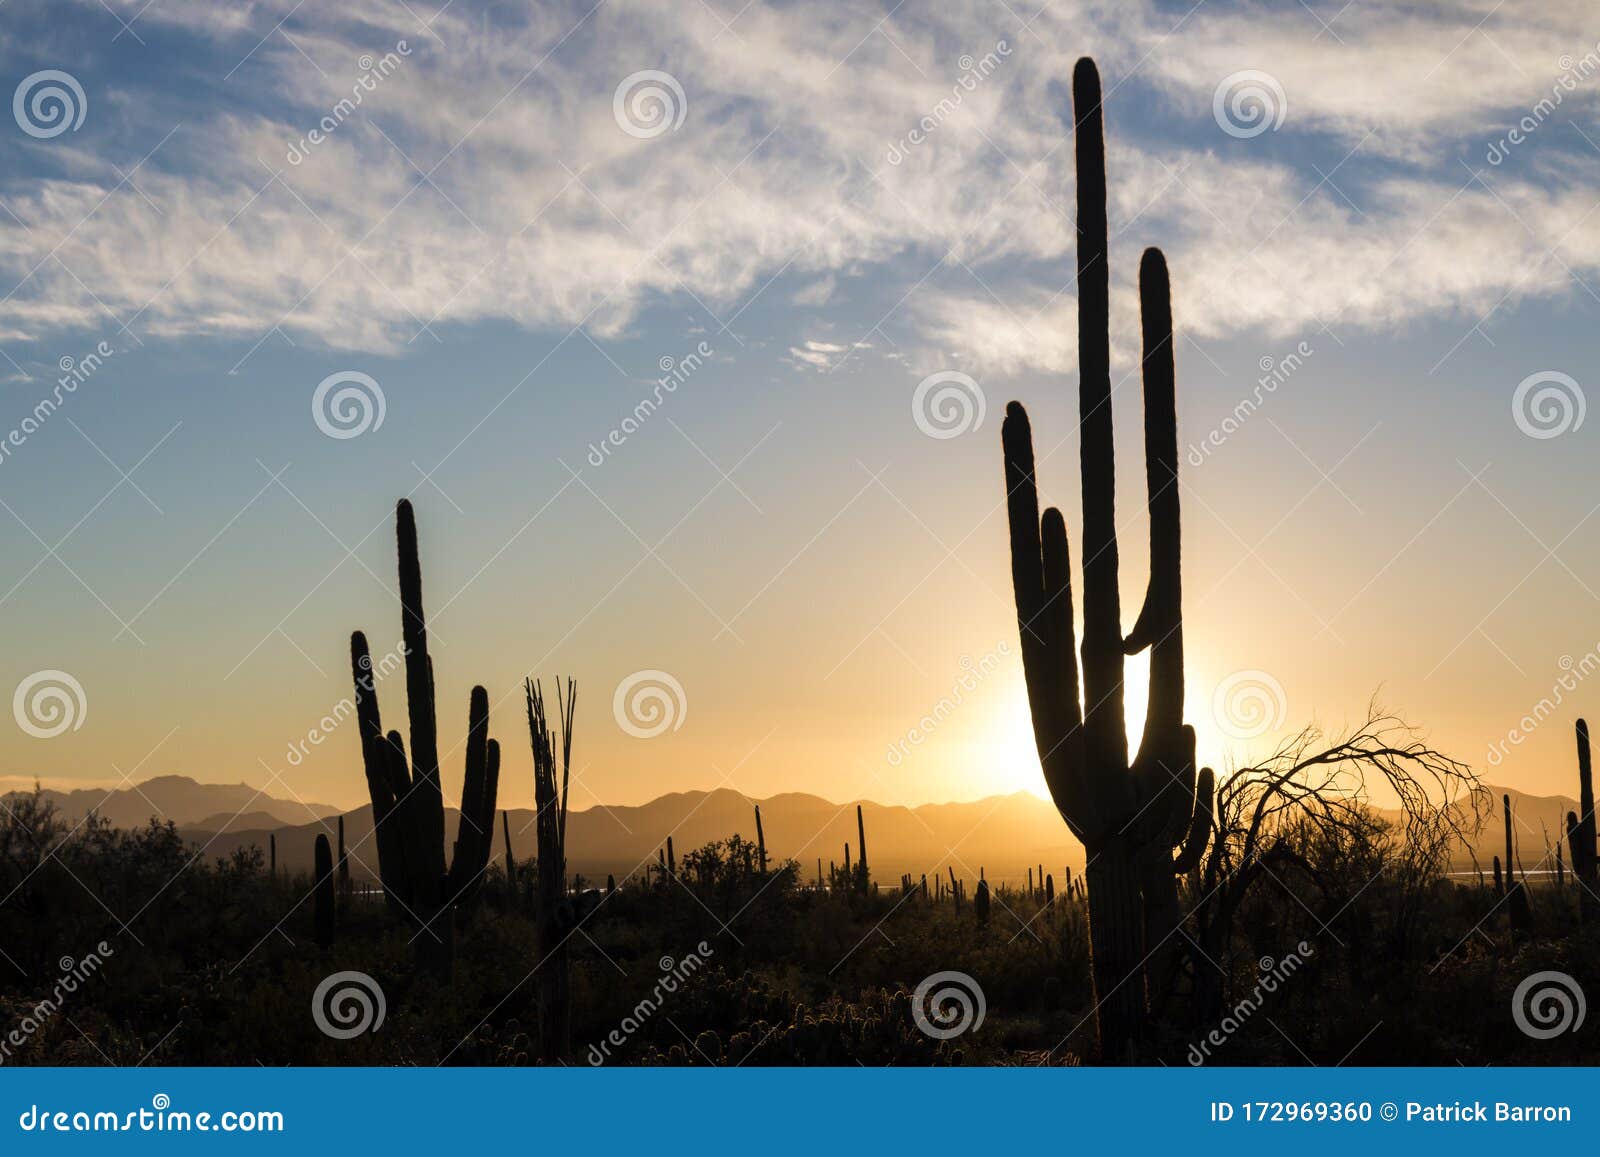 Saguaro National Park Sunset in Arizona Stock Photo - Image of grass ...